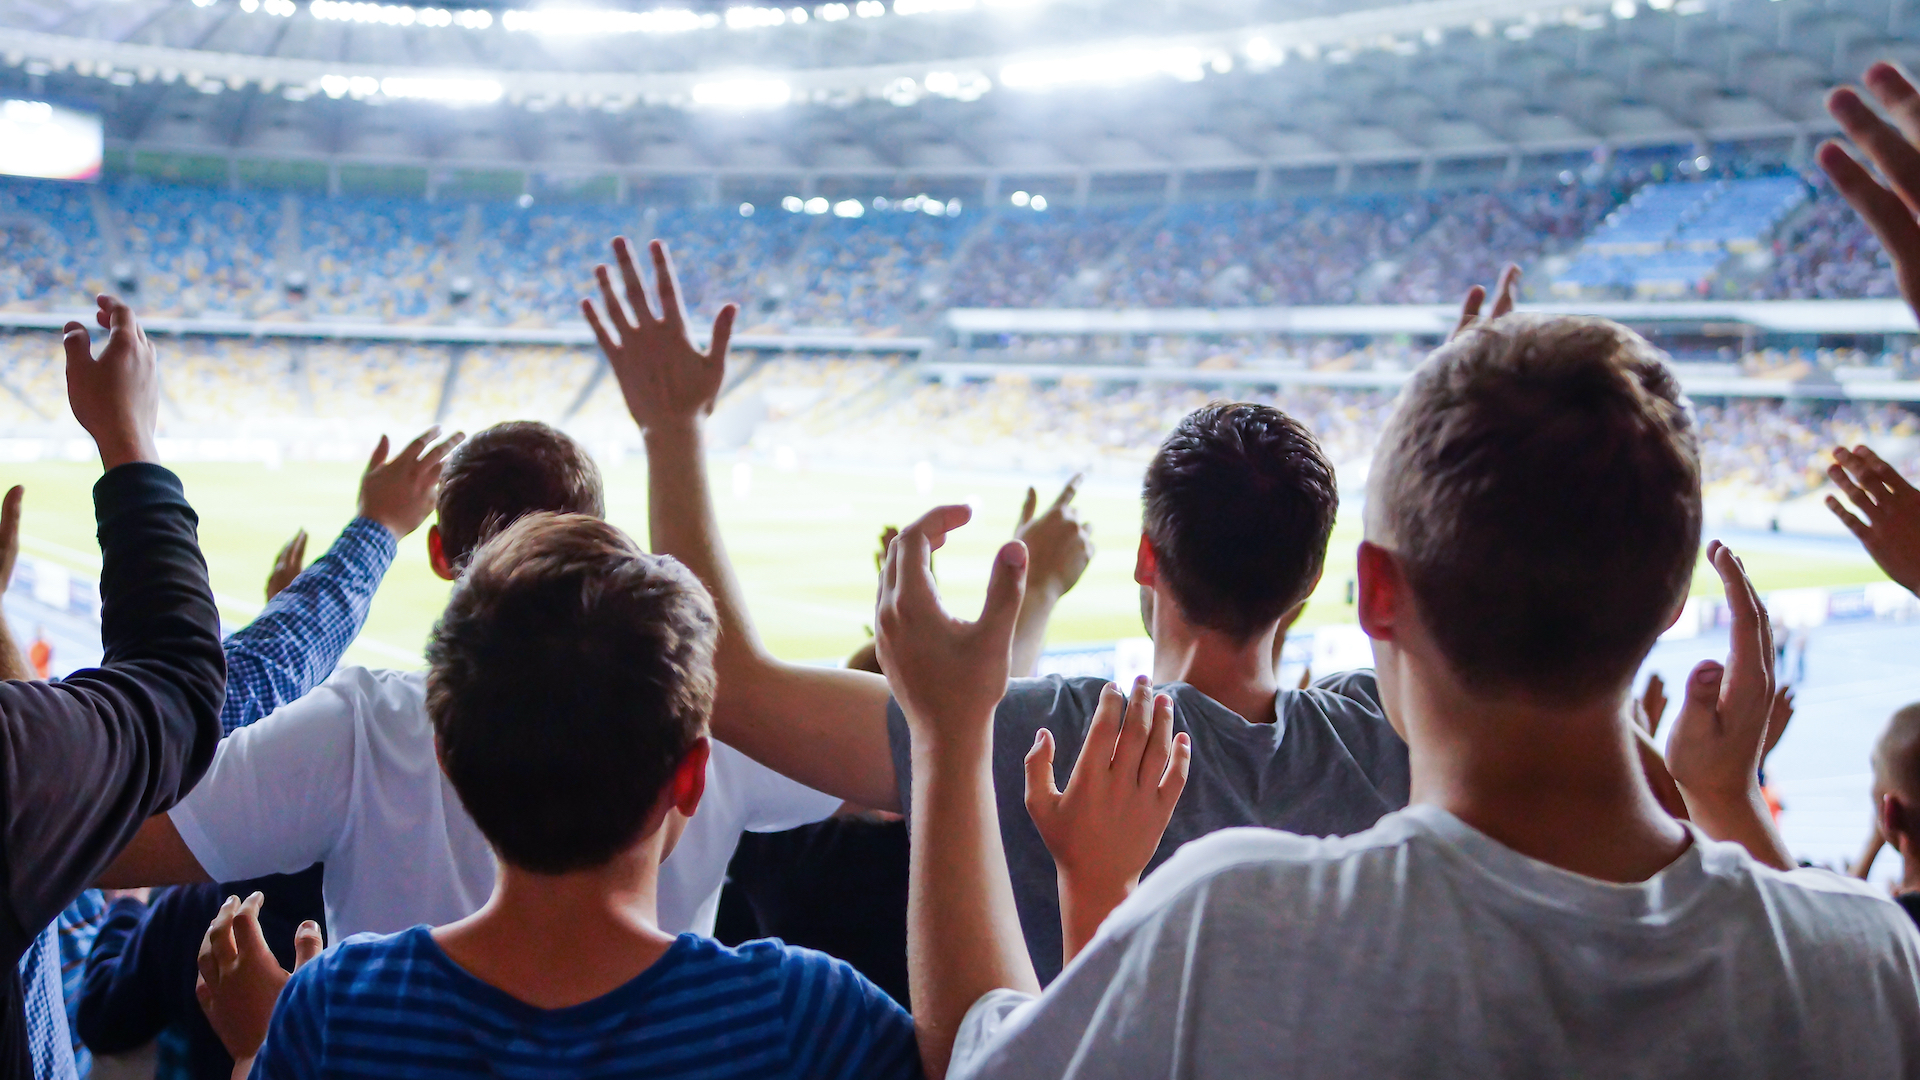 A cheering football crowd in a big stadium